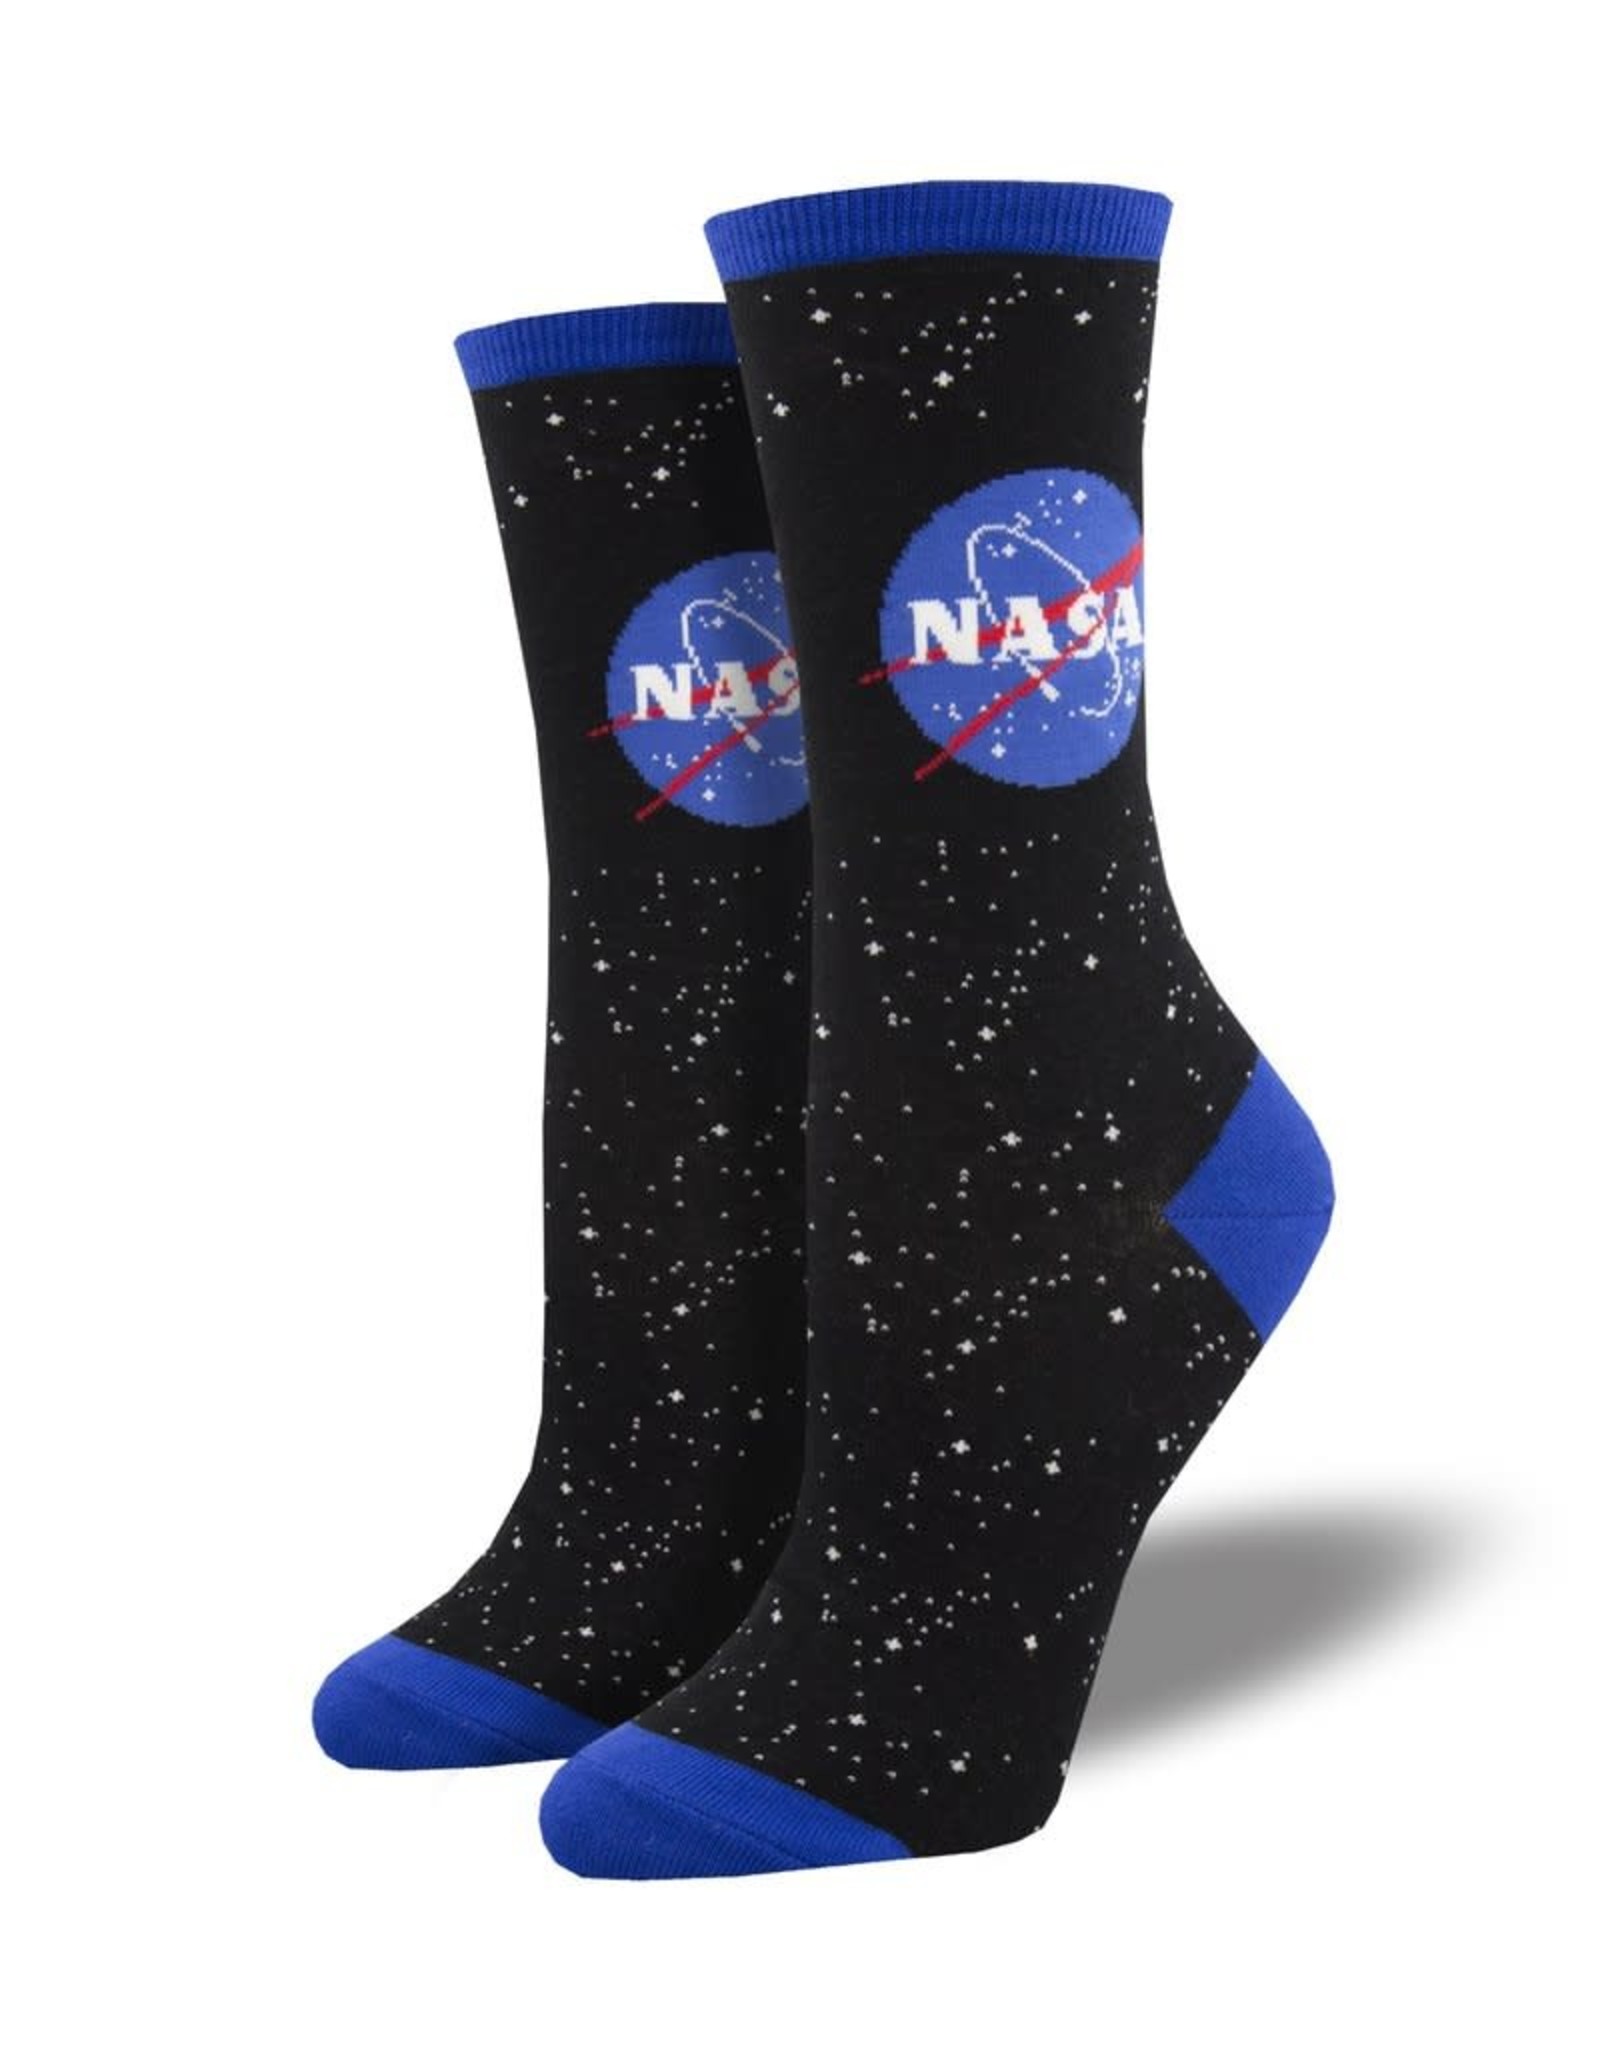 Socksmith WOMEN'S NASA LOGO SOCKS (Size 9-11)